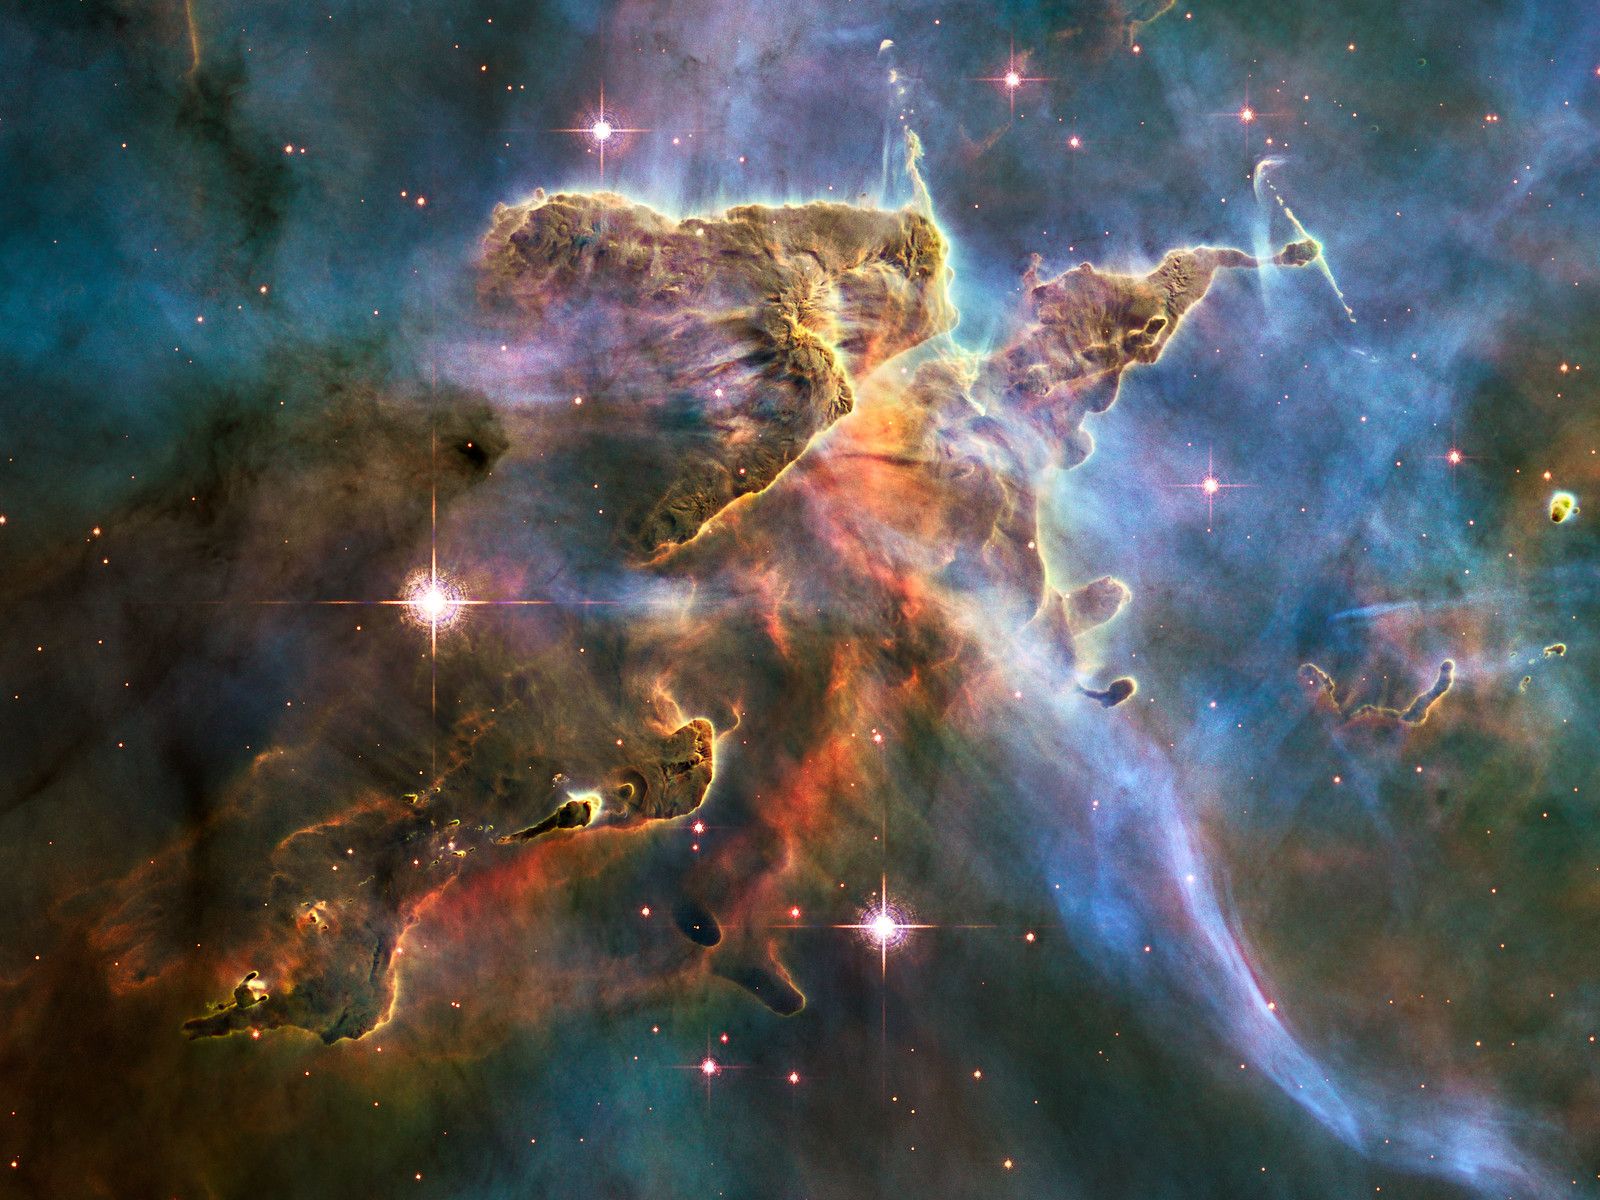 Hubble captures spectacular “landscape” in the Carina Nebula. ESA